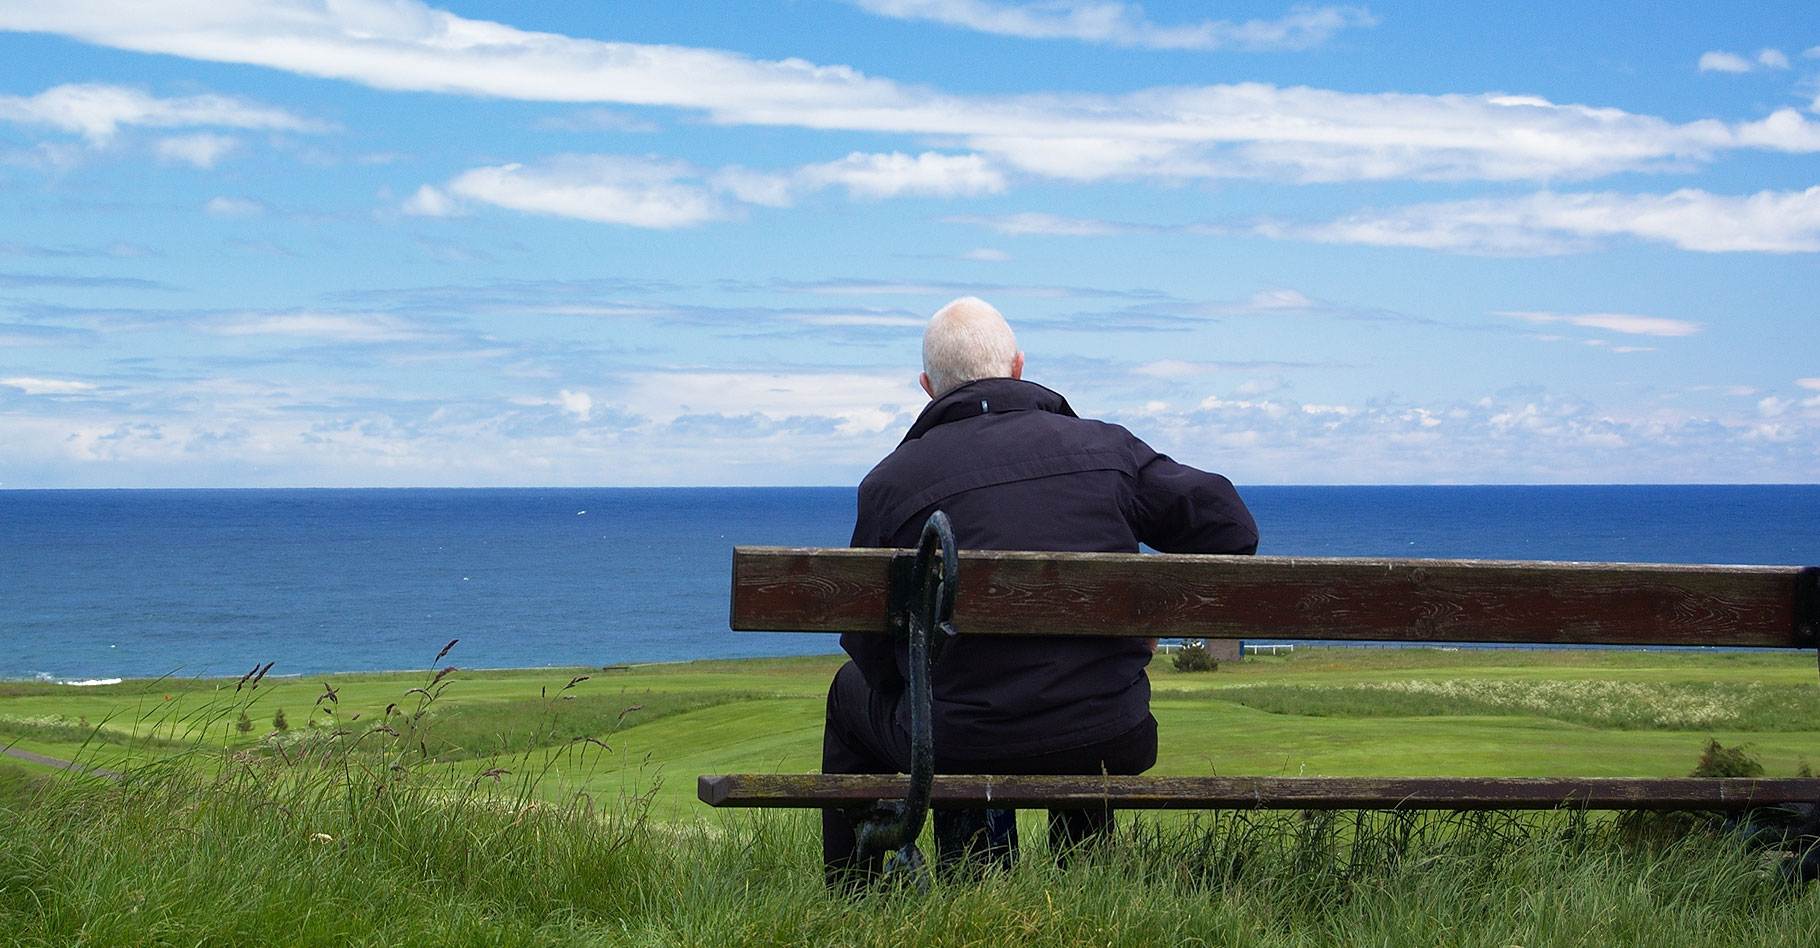 La maladie de Parkinson un monde interieur de solitude. © Tim Parkinson - CC BY-NC 2.0